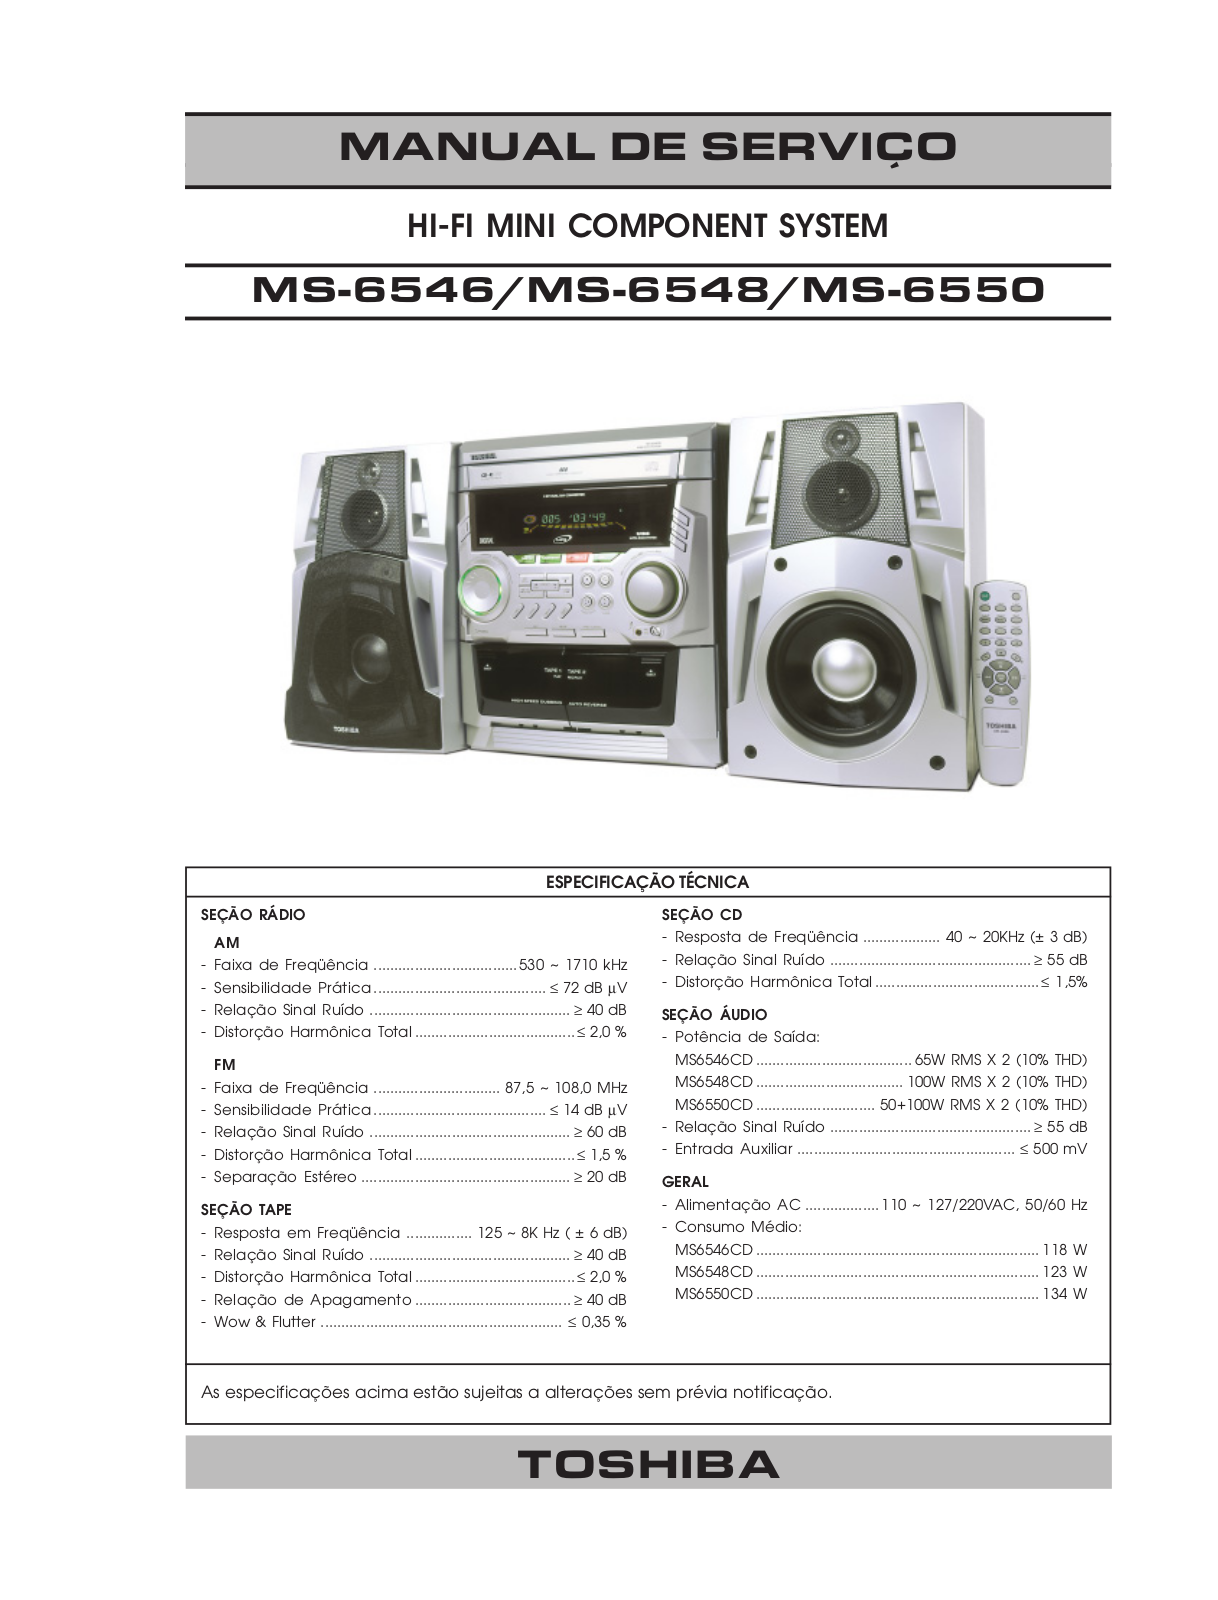 Toshiba MS-6546, MS-6548, MS-6550 Service manual